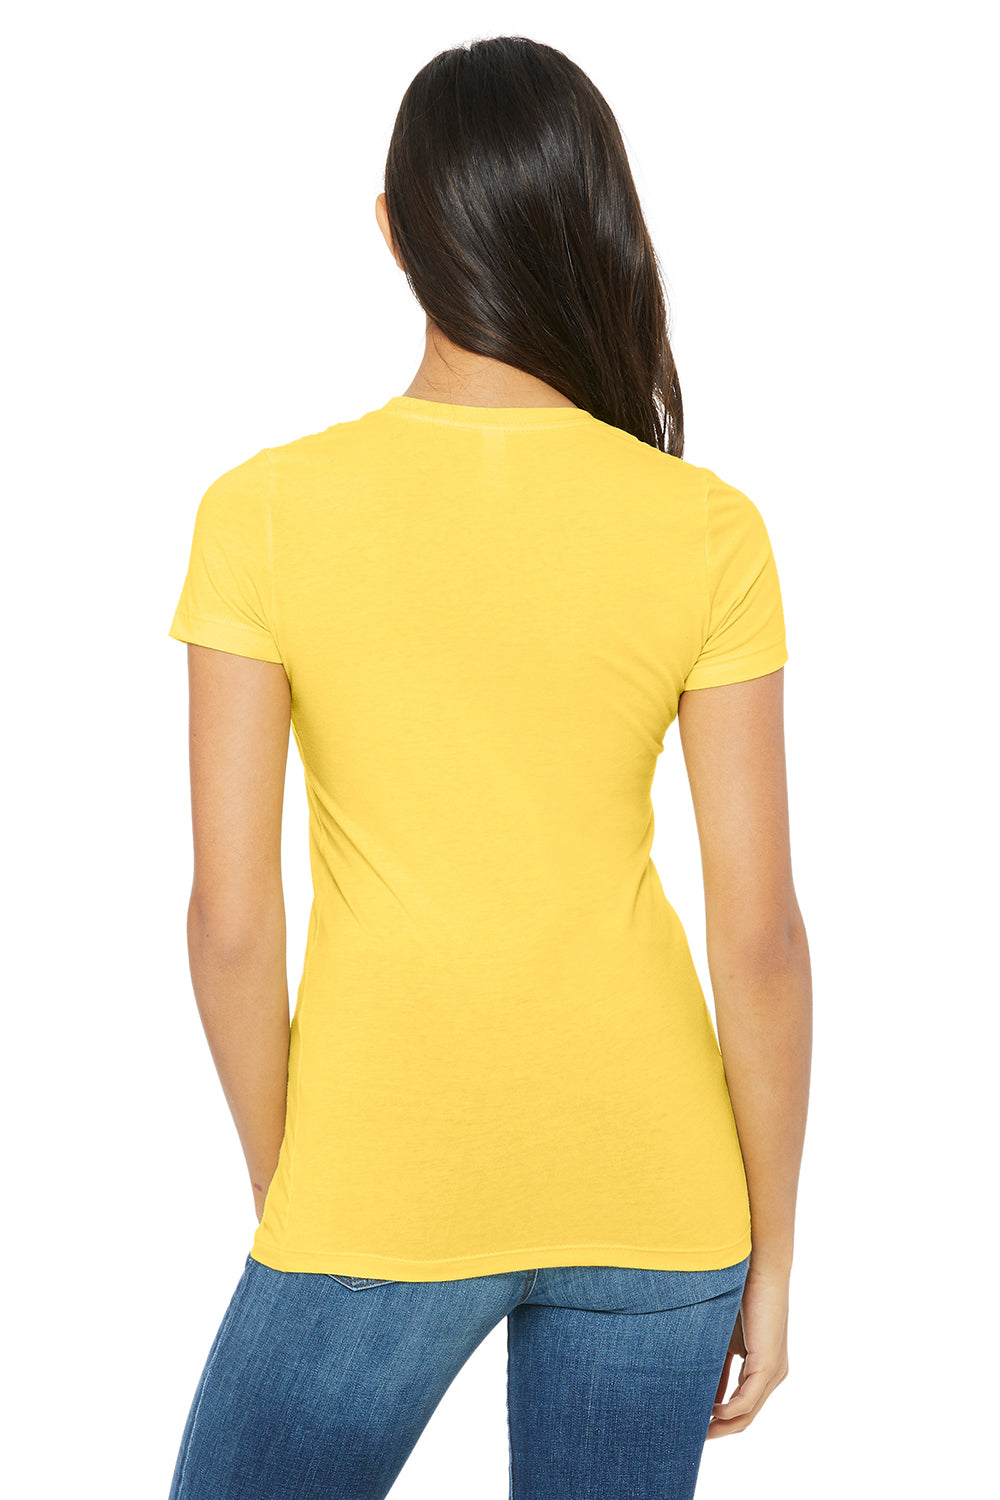 Bella + Canvas BC6004/6004 Womens The Favorite Short Sleeve Crewneck T-Shirt Yellow Model Back